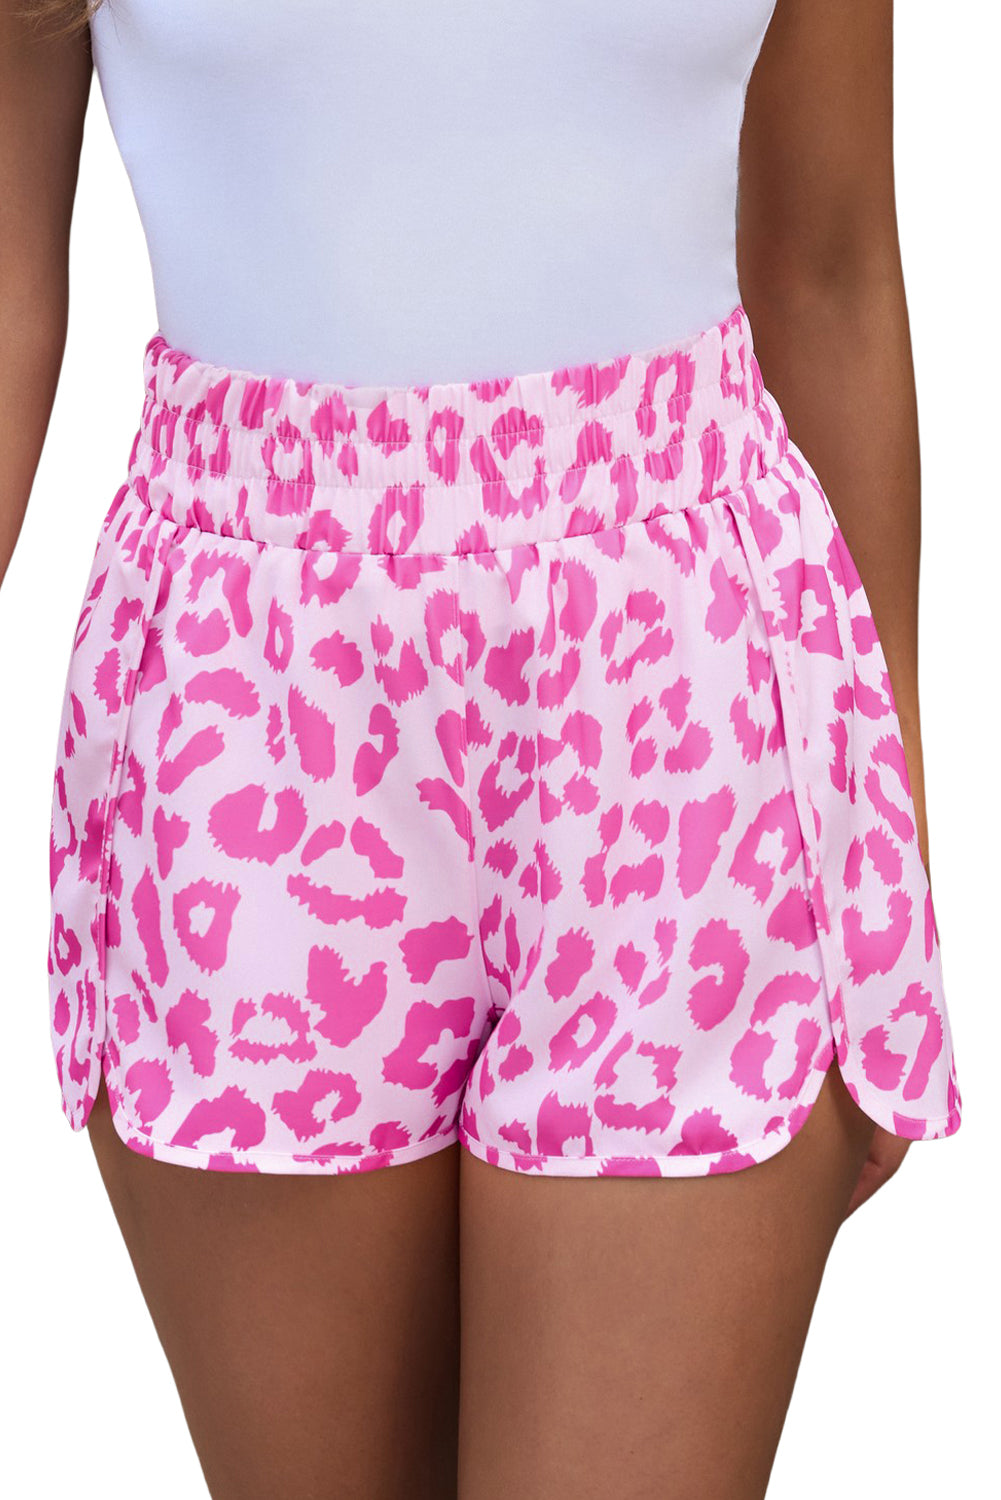 Leopard Elastic Waist Shorts - Women’s Clothing & Accessories - Shorts - 13 - 2024